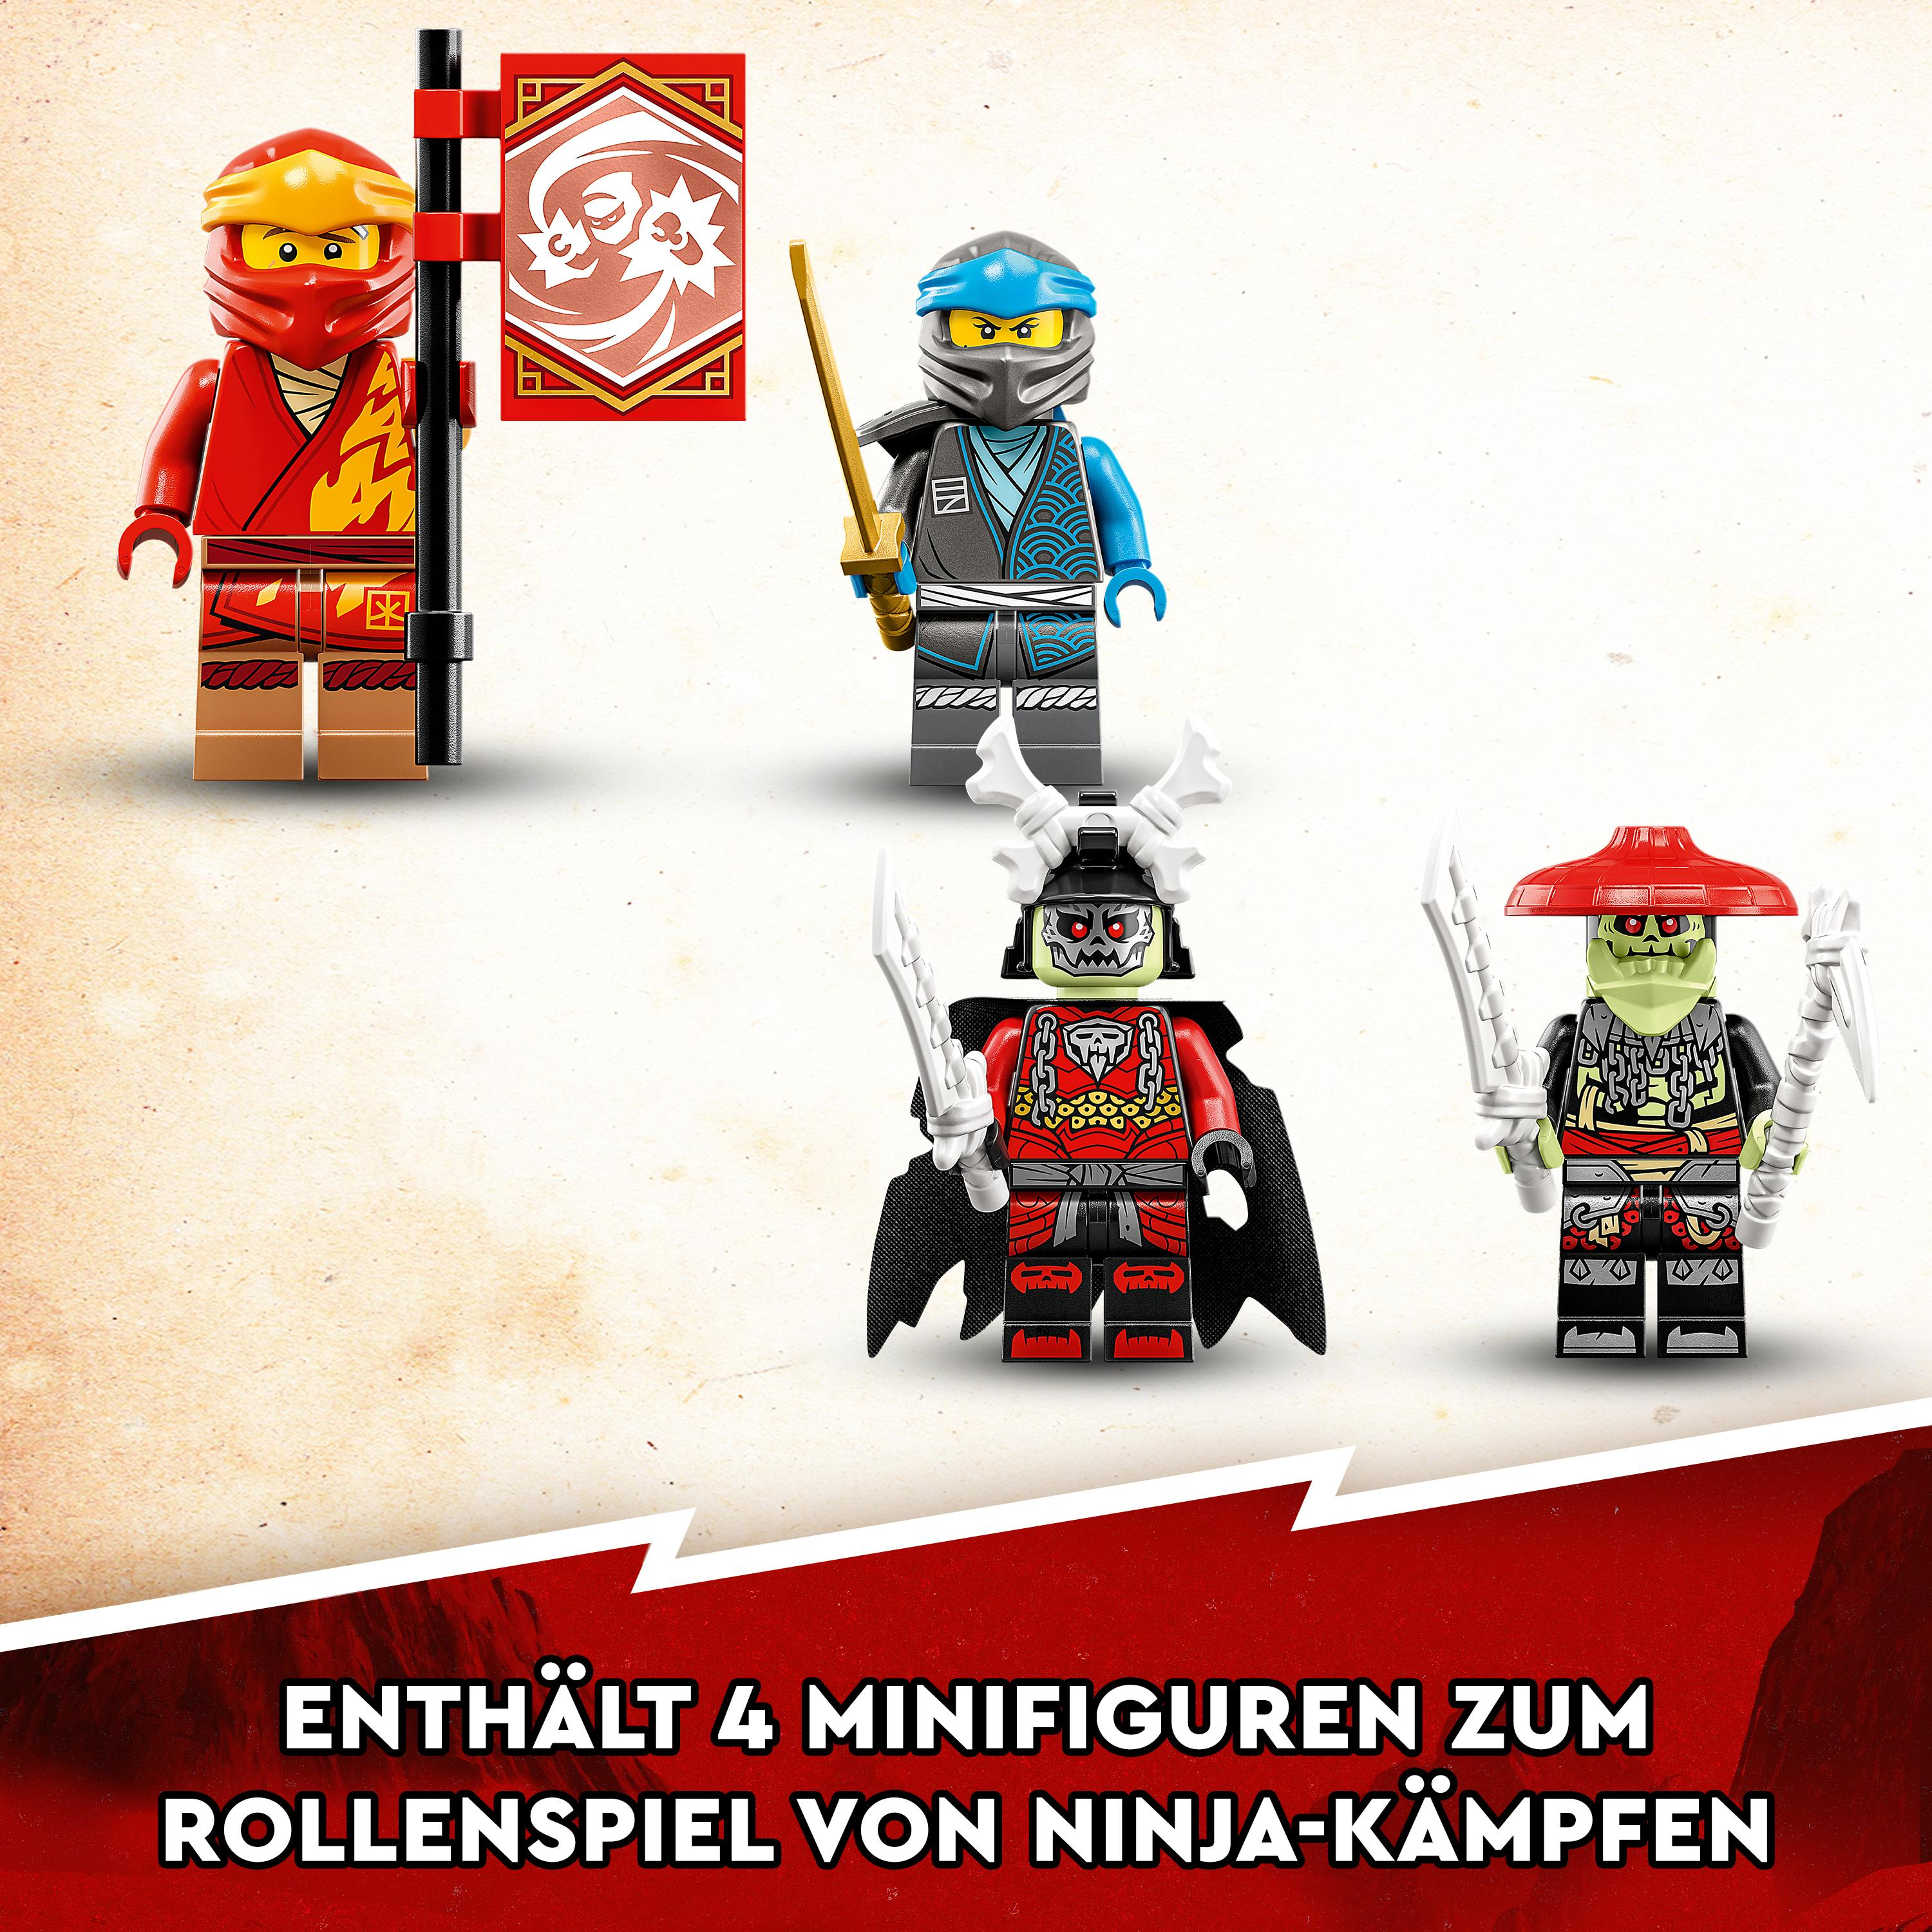 NINJAGO LEGO 71783 EVO Kais Mehrfarbig Bausatz, Mech-Bike